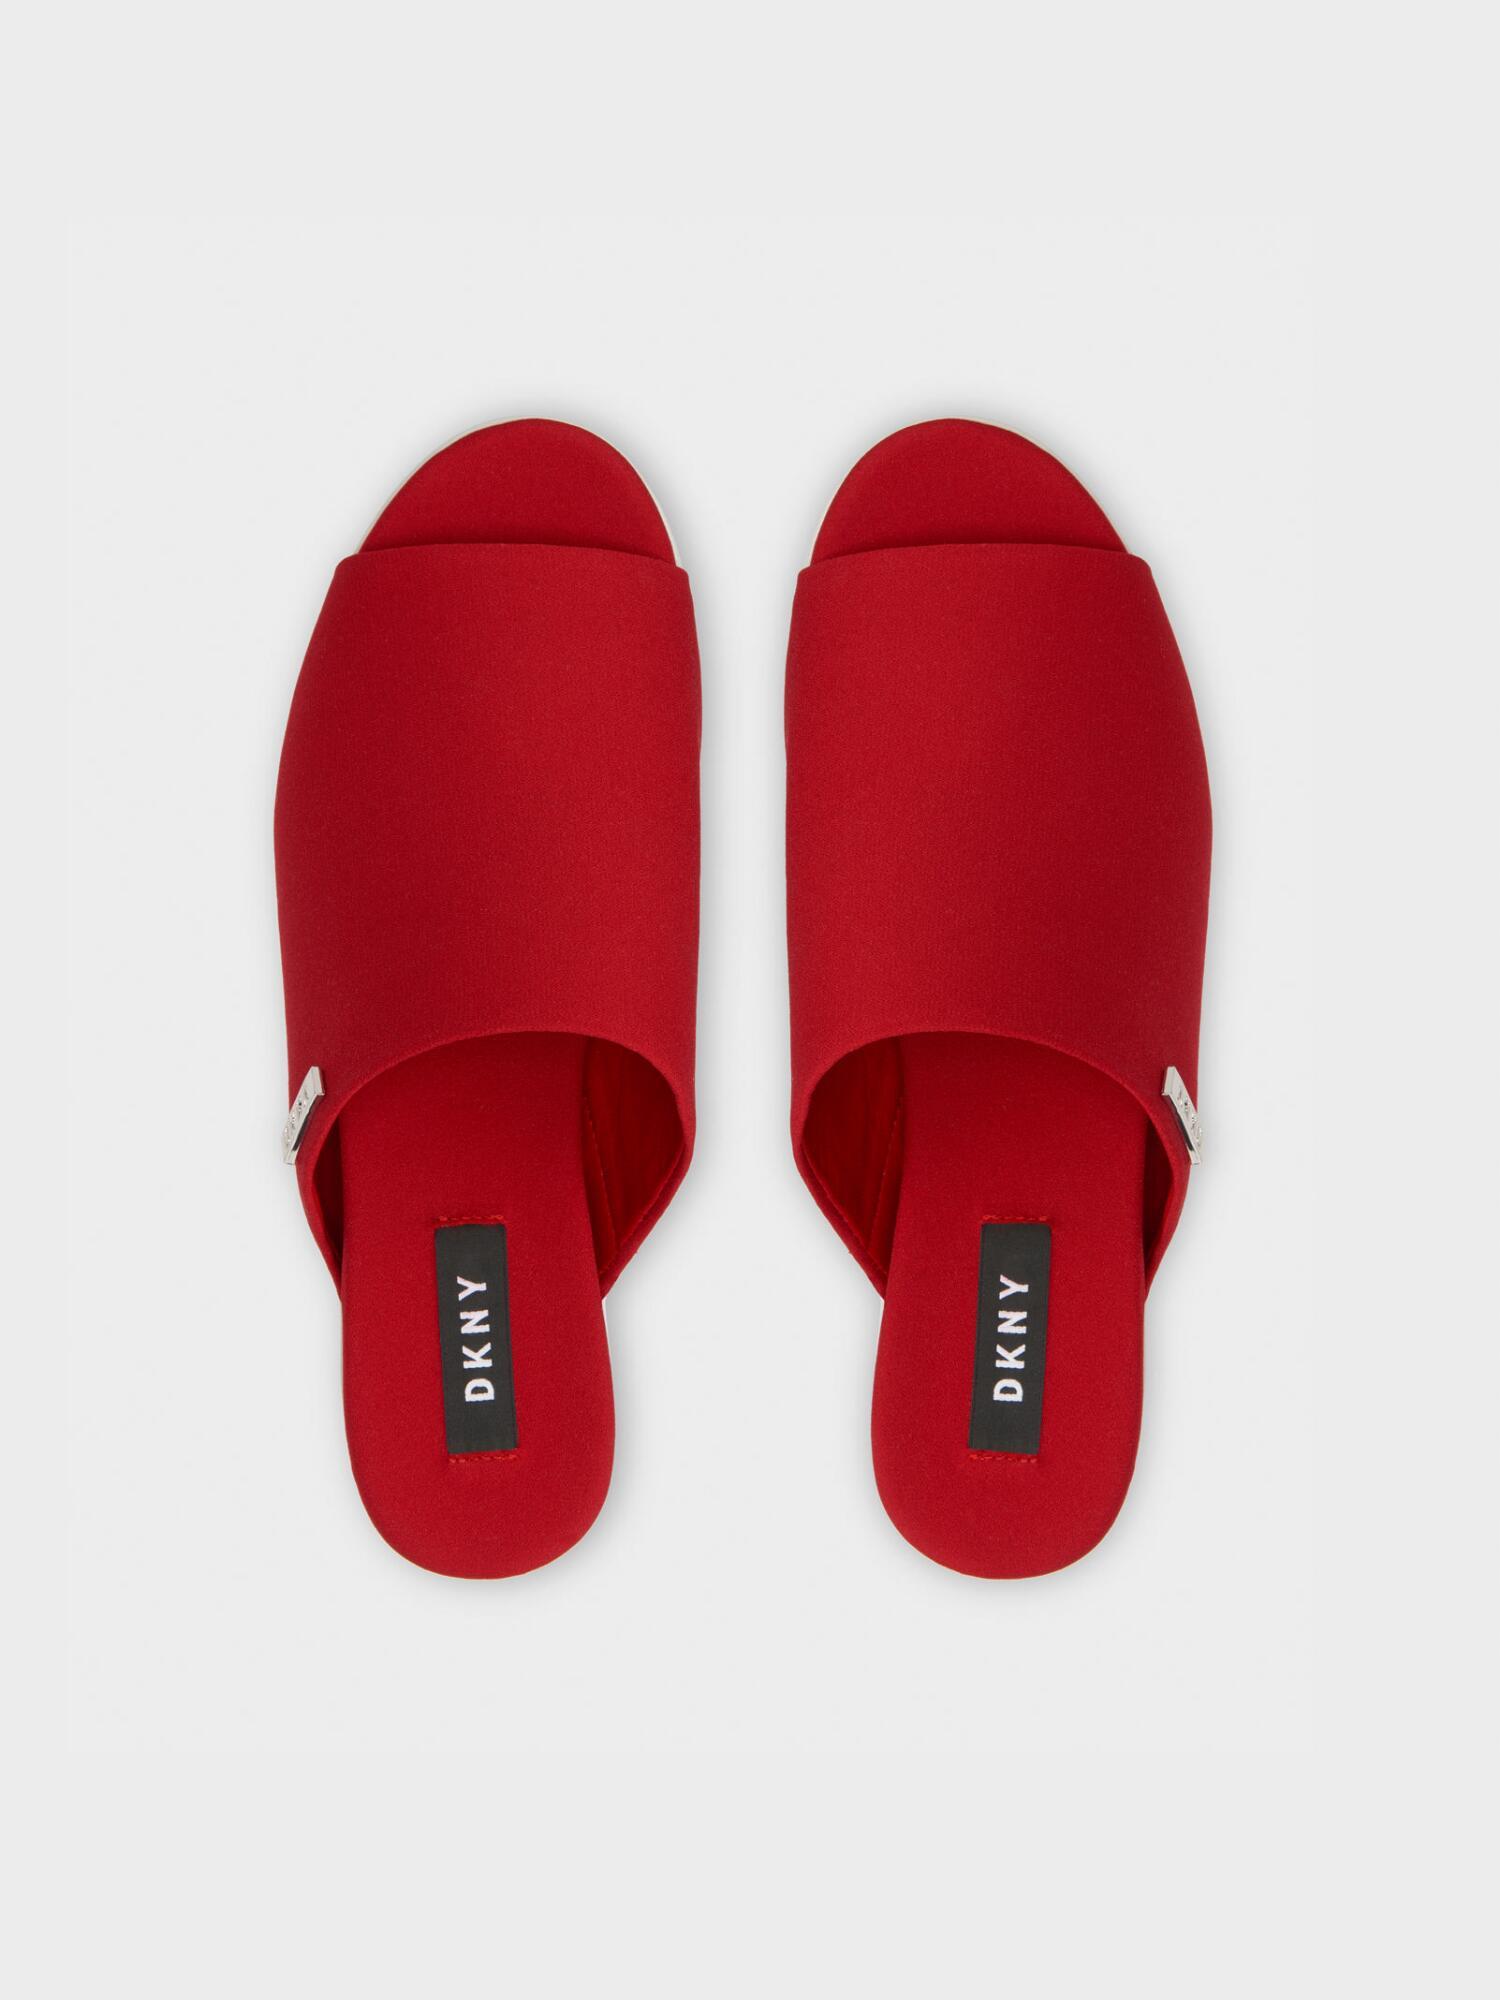 Dkny Carli Platform Sandals Flash Sales, 58% OFF | www.bridgepartnersllc.com